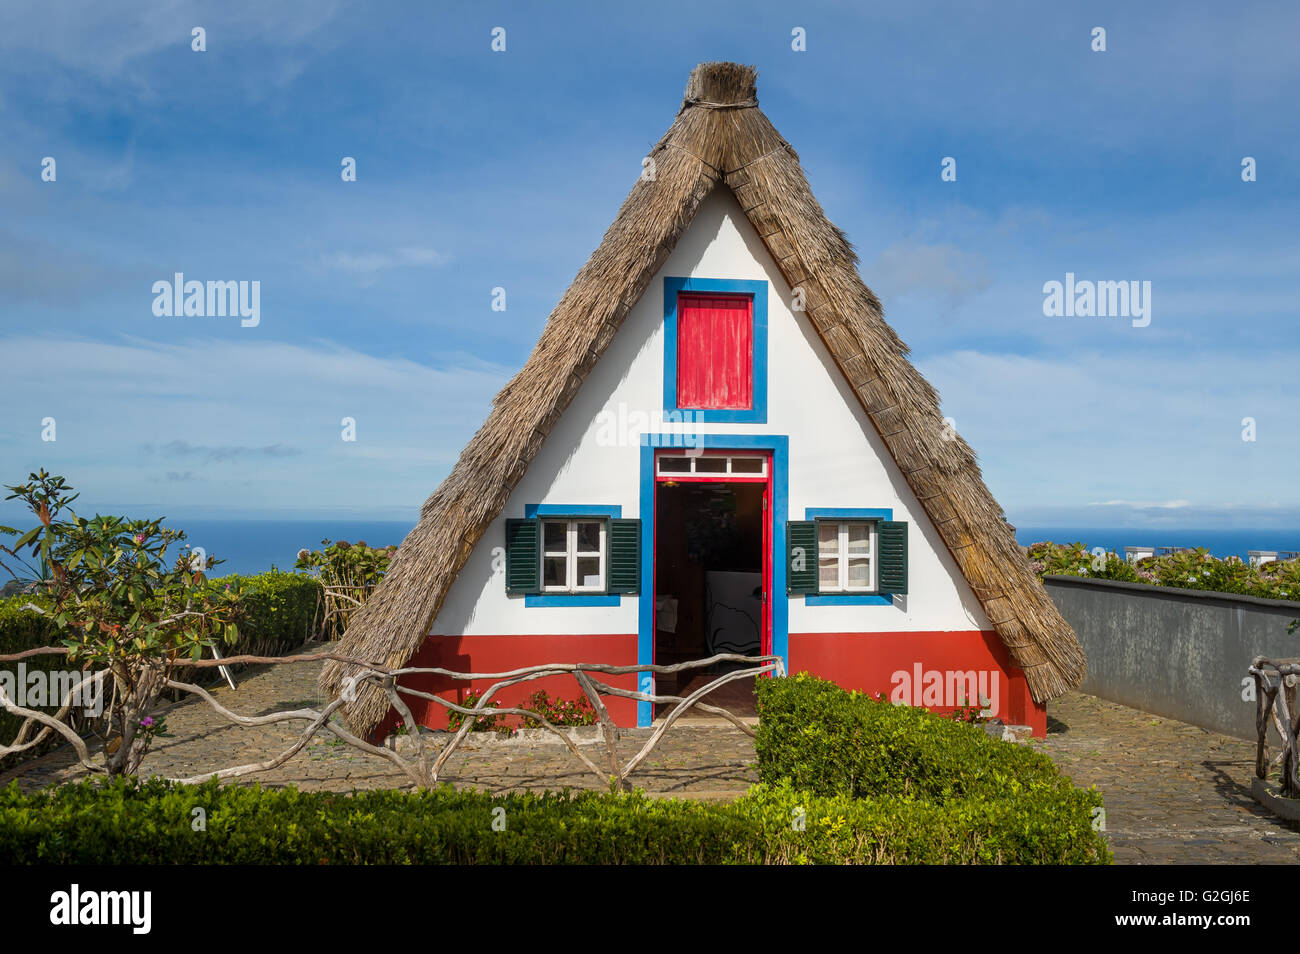 Colorful traditional Madeira island house Stock Photo